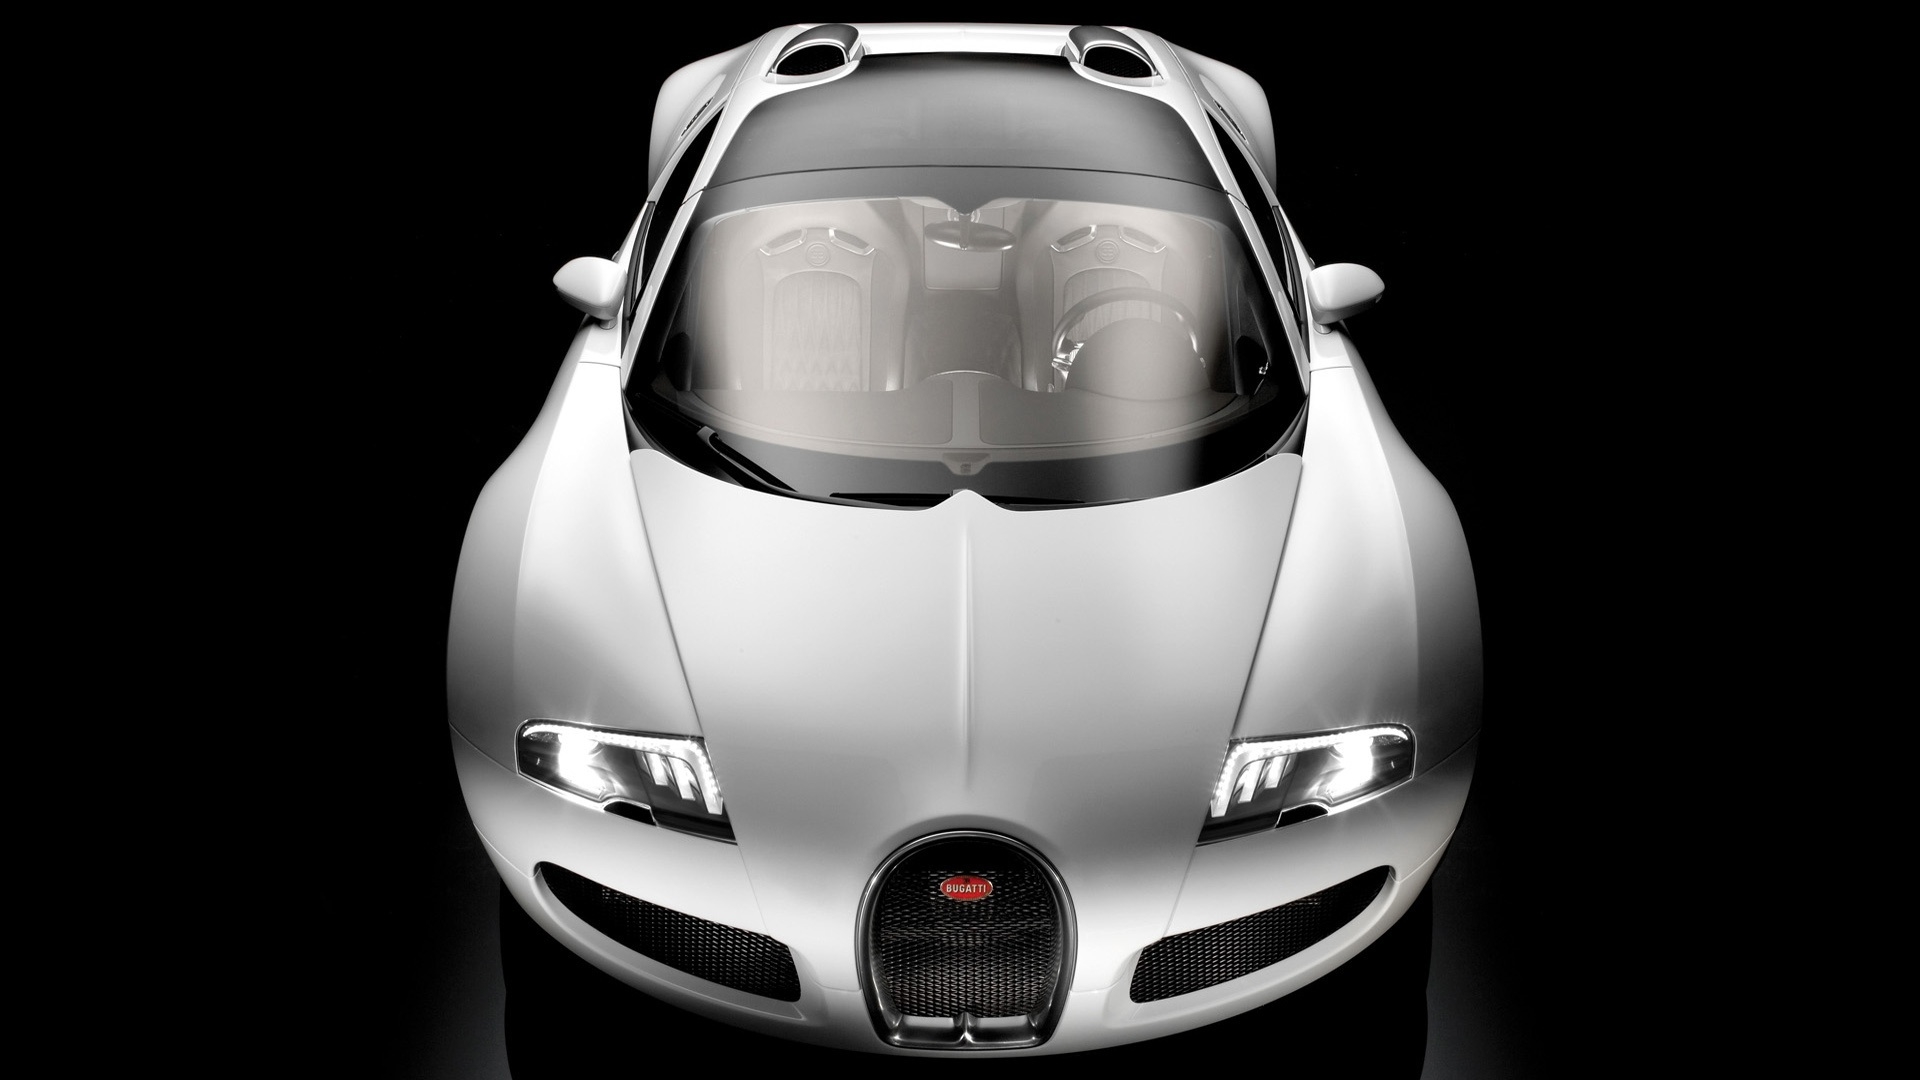 Bugatti Veyron 16.4 Grand Sport 2009 - Front Top Studio for 1920 x 1080 HDTV 1080p resolution